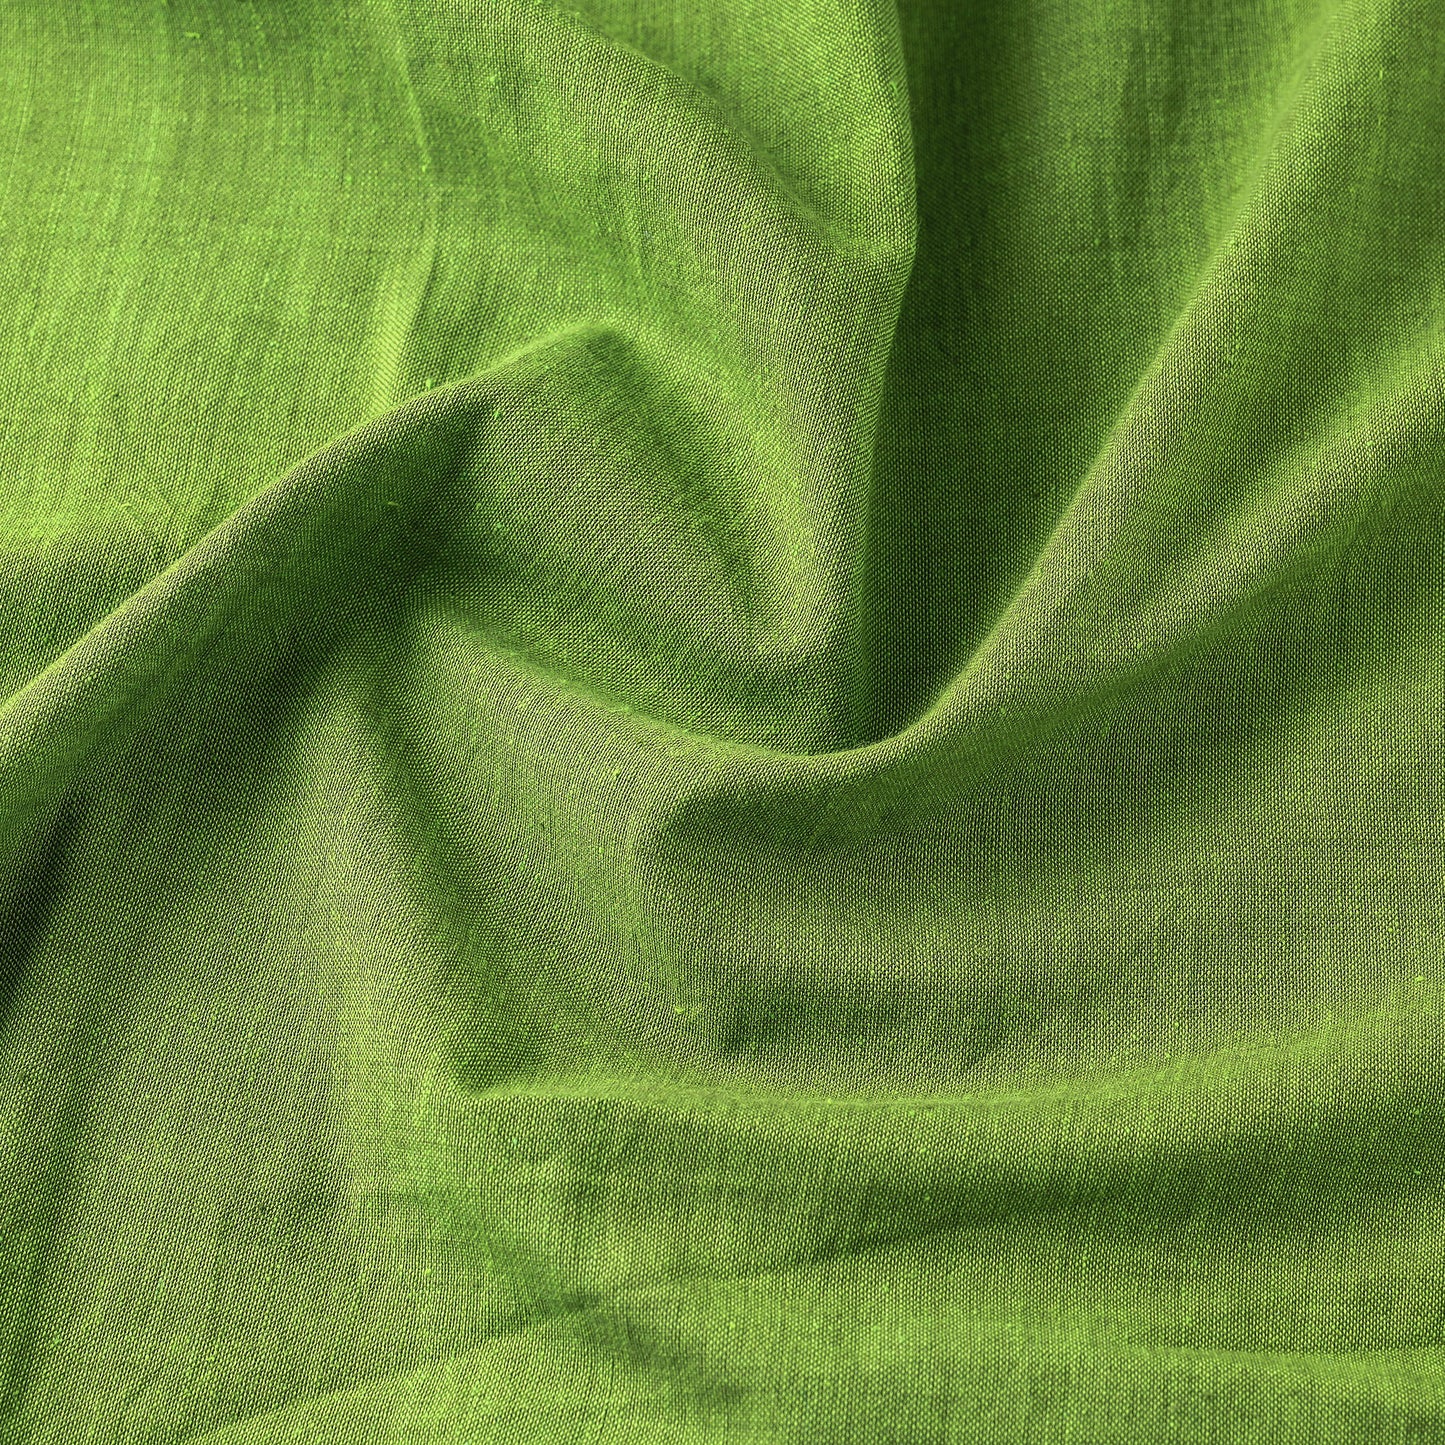 Green - Bodoweaves Plain Cotton Handloom Fabric